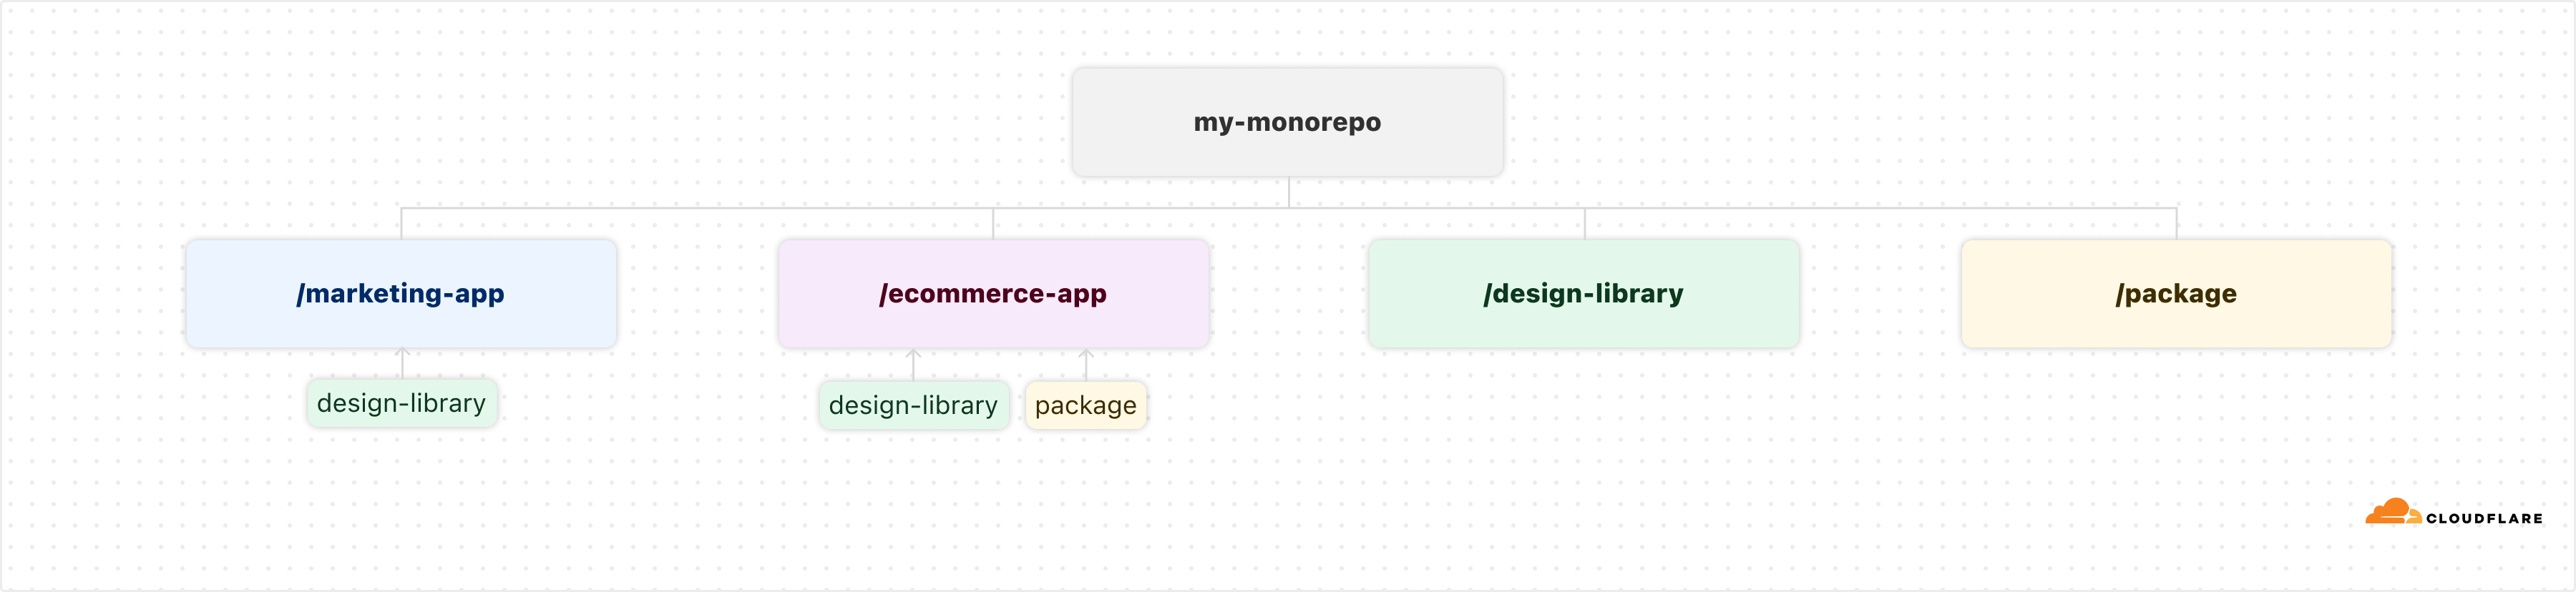 Monorepo example diagram